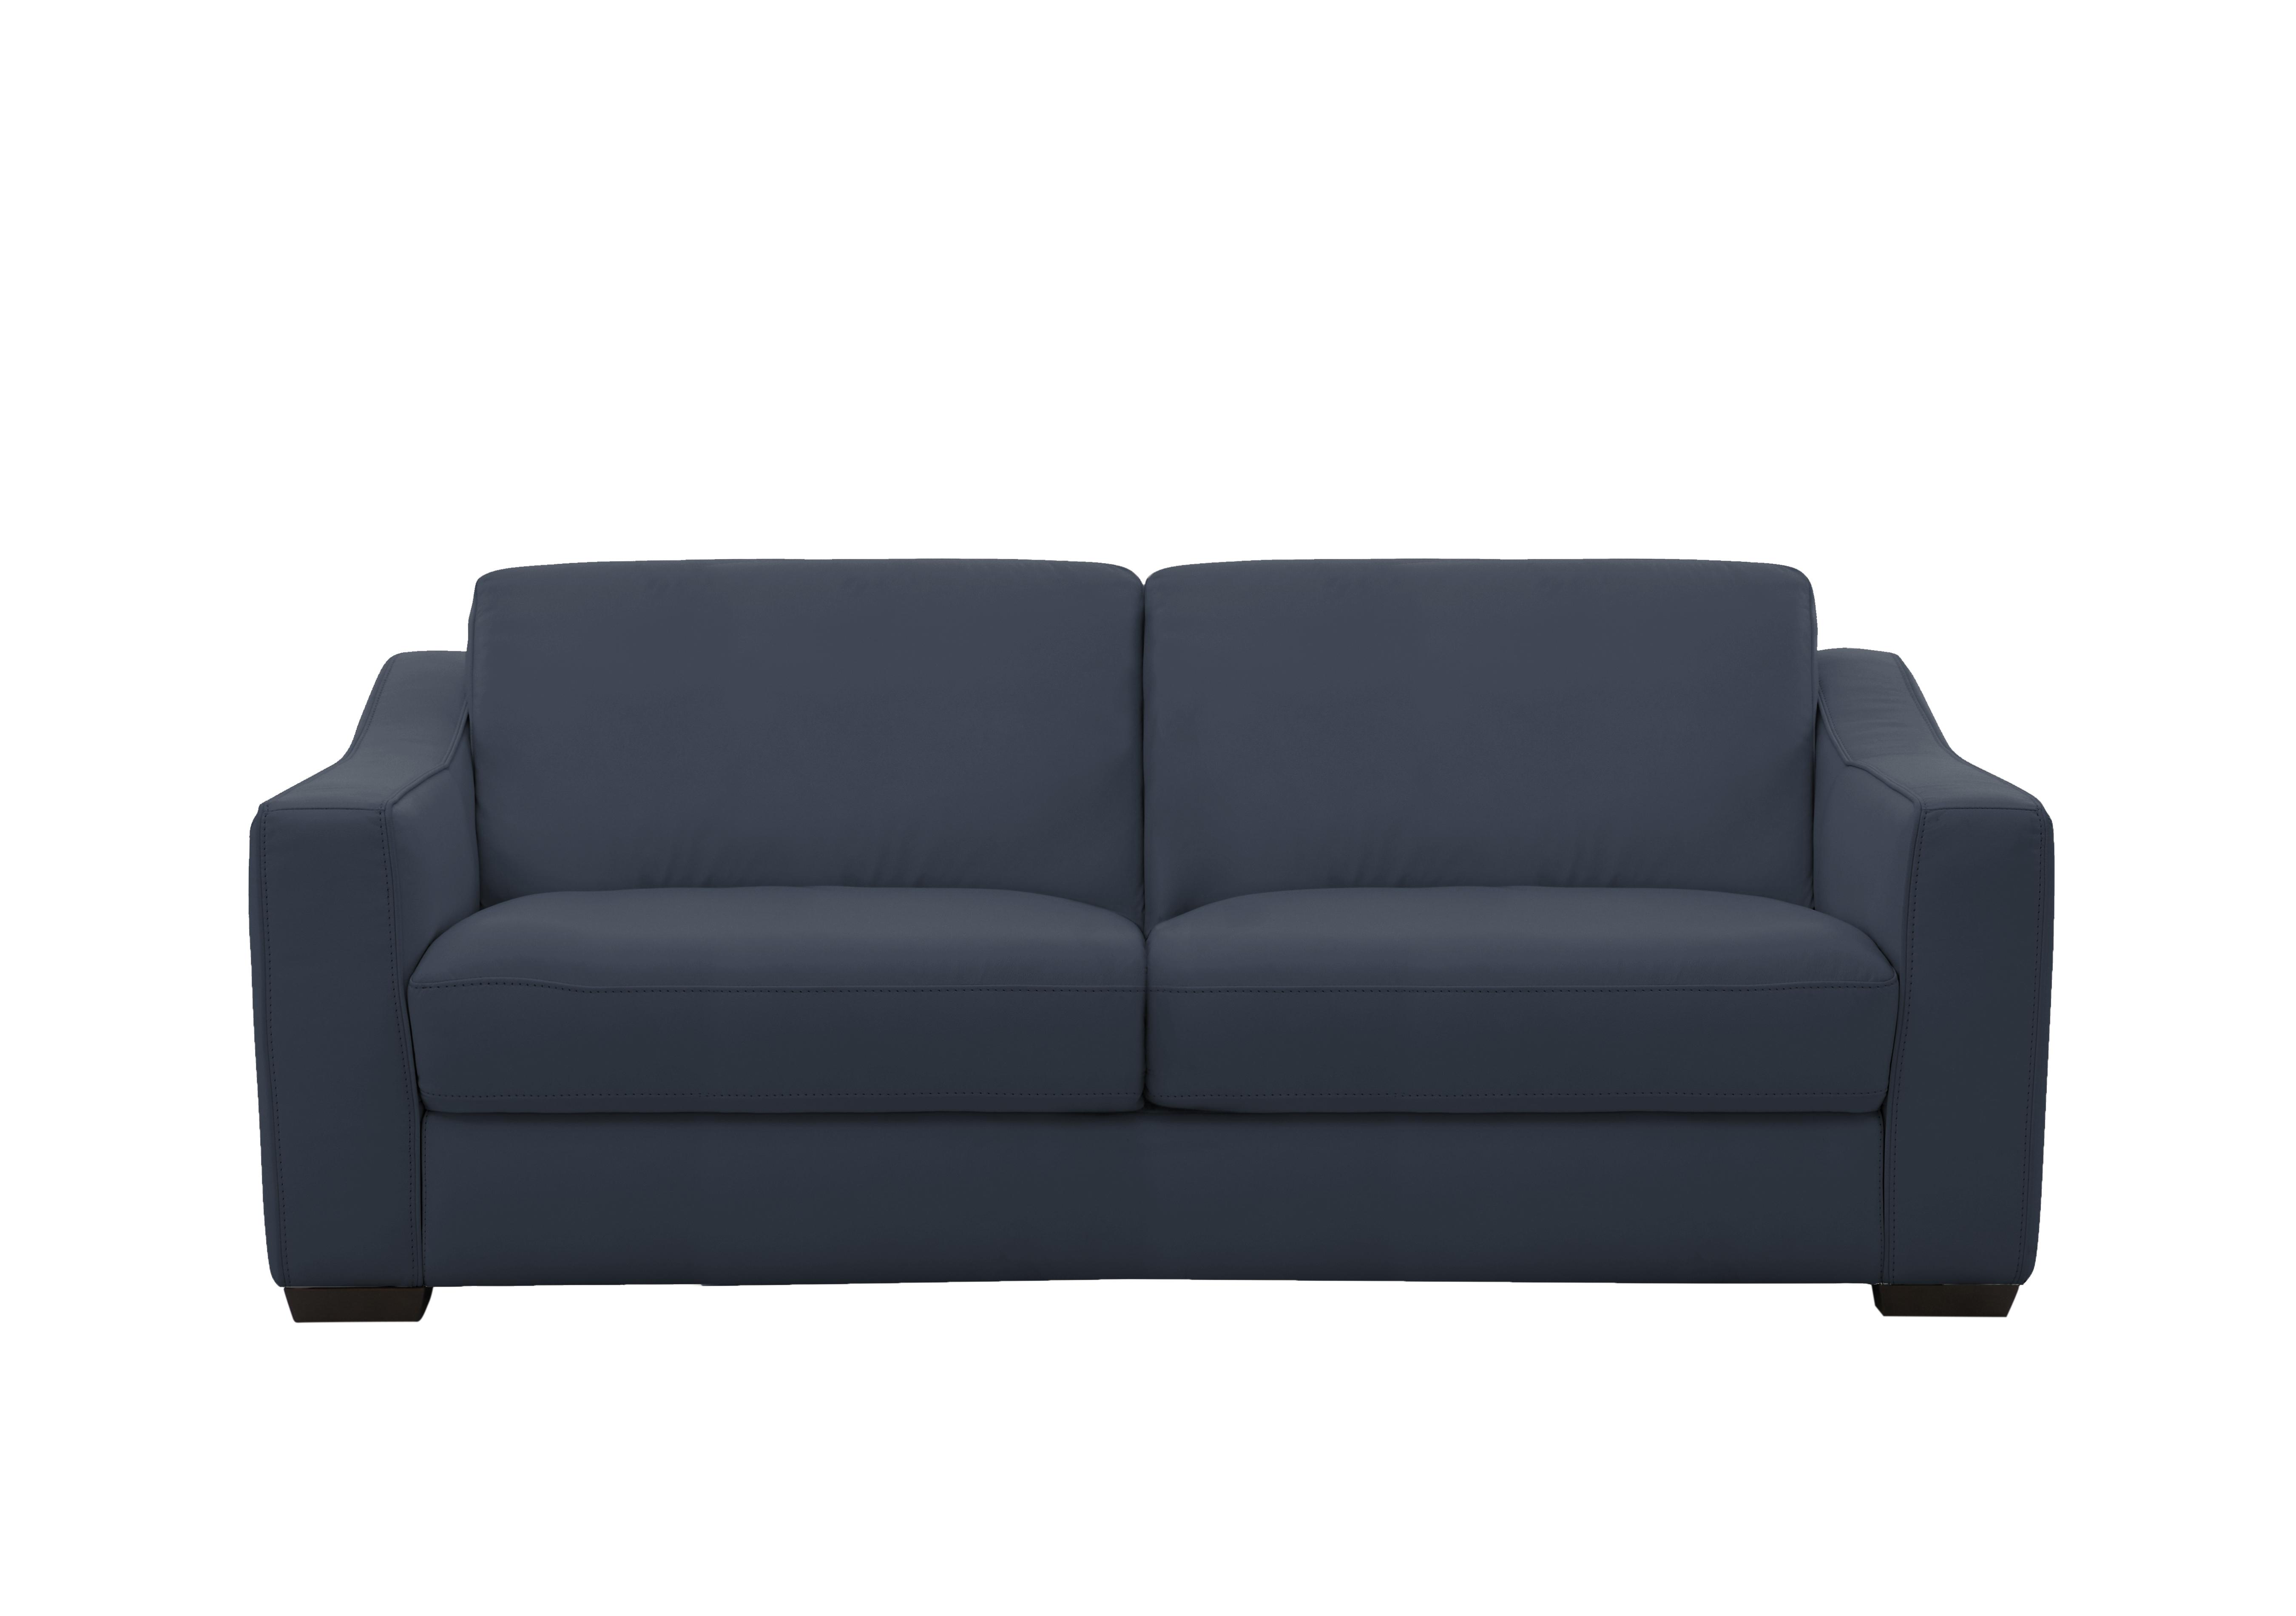 Optimus 3 Seater Leather Sofa in Bv-313e Ocean Blue on Furniture Village